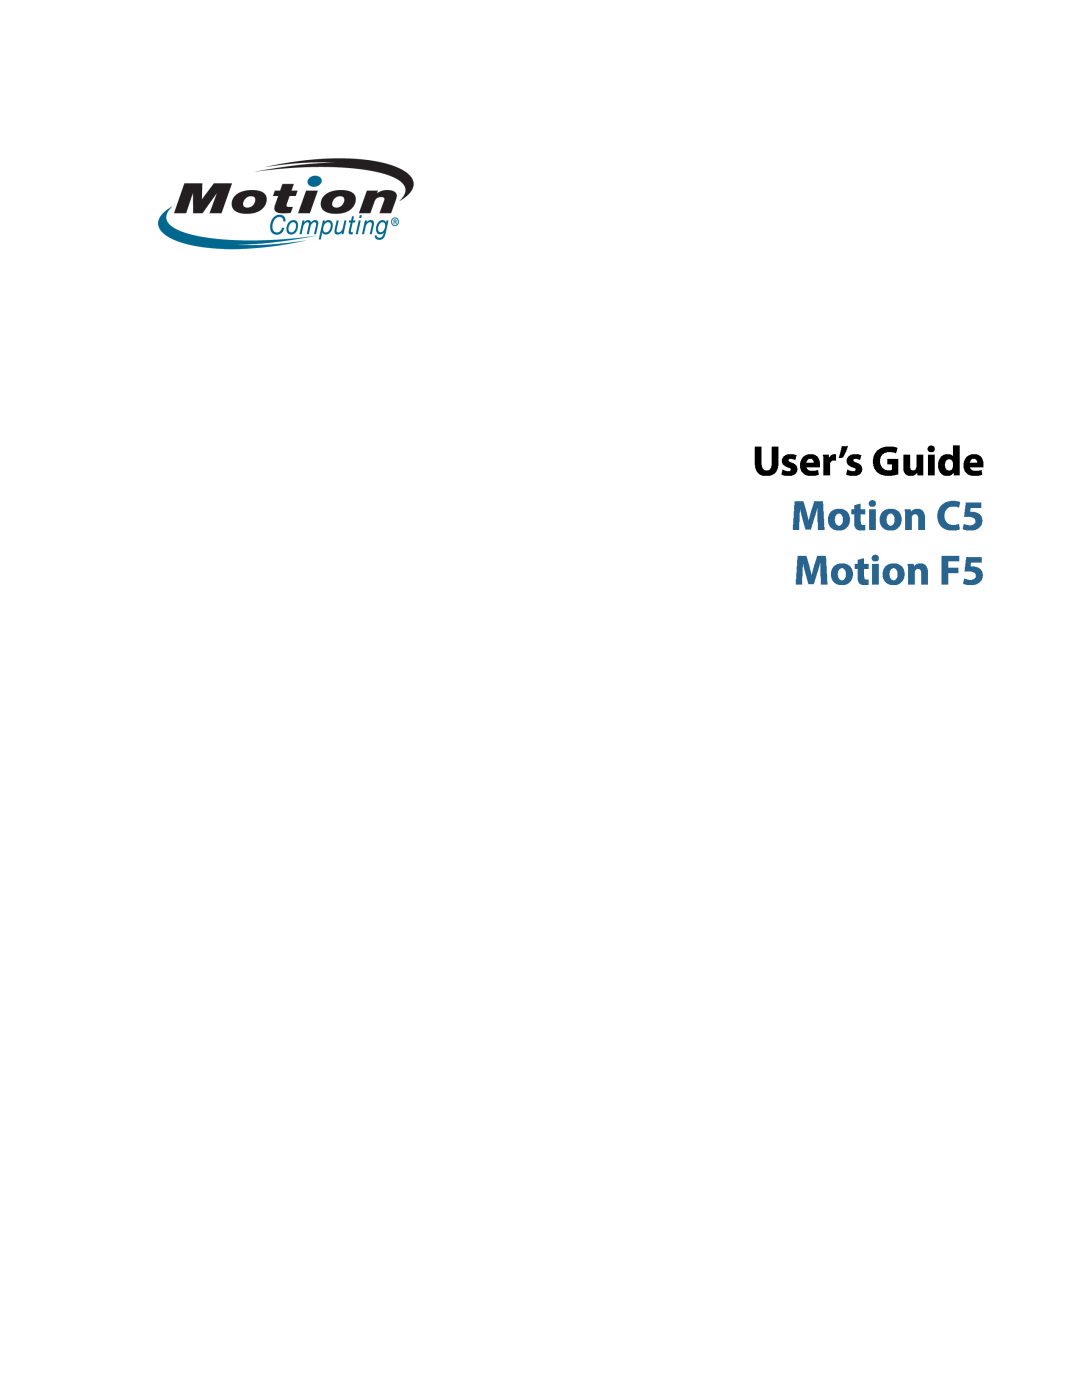 Motion Computing GU3K2722 manual User’s Guide, Motion C5 Motion F5 